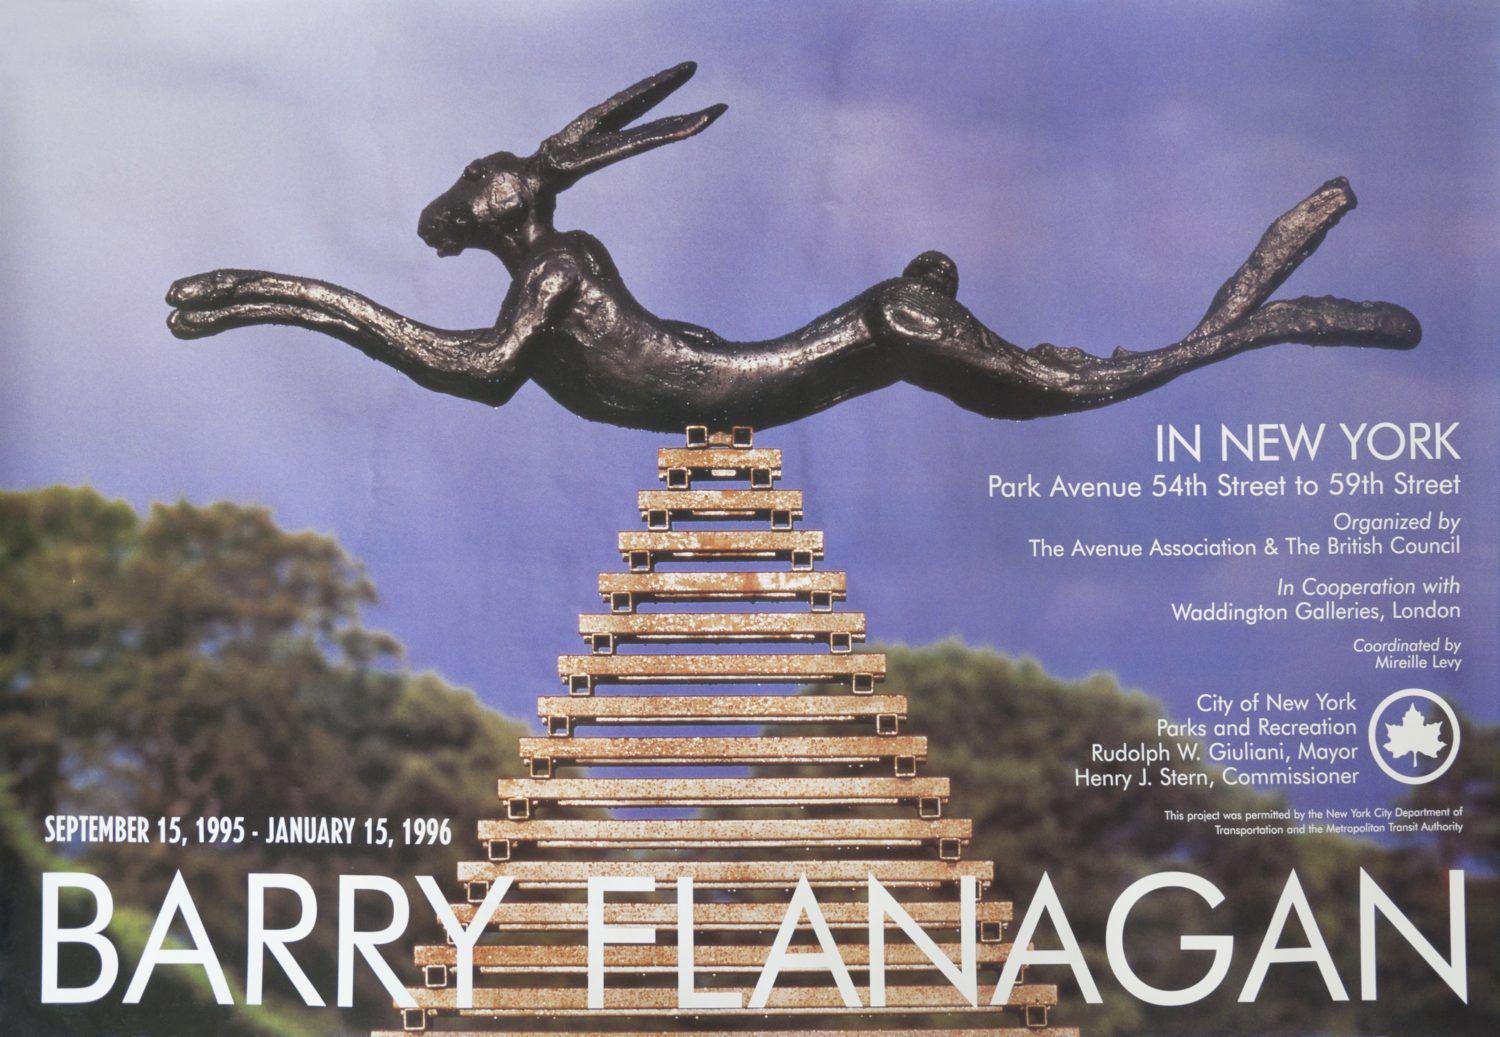 ‘Barry Flanagan’, New York Park Avenue 54th Street to 59th Street, USA (1995 – 1996)